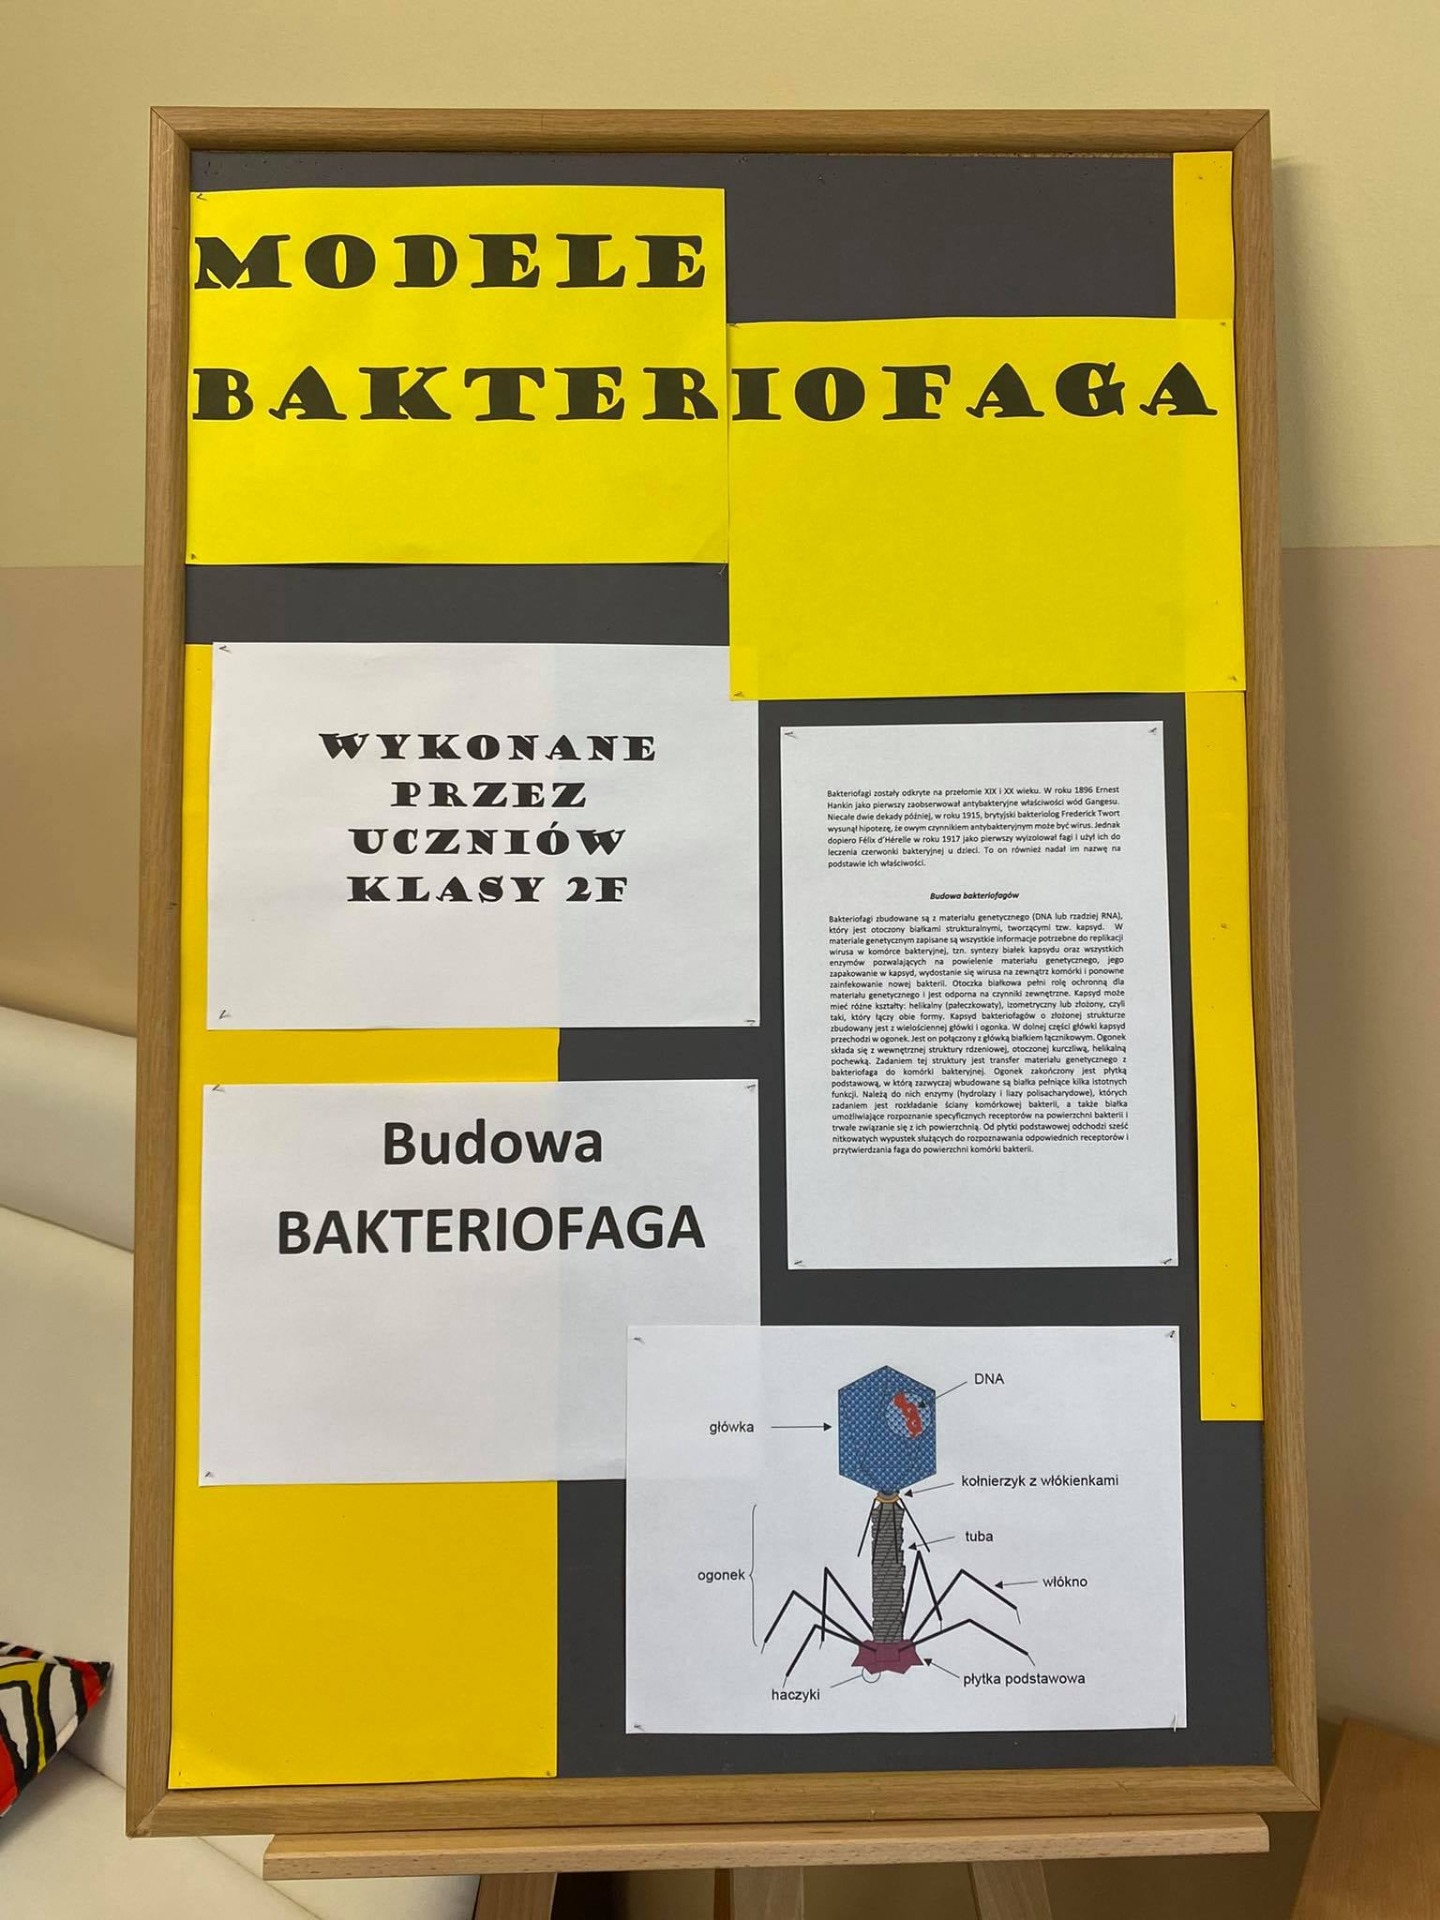 Tablica z informacjami na temat bakteriofagów.